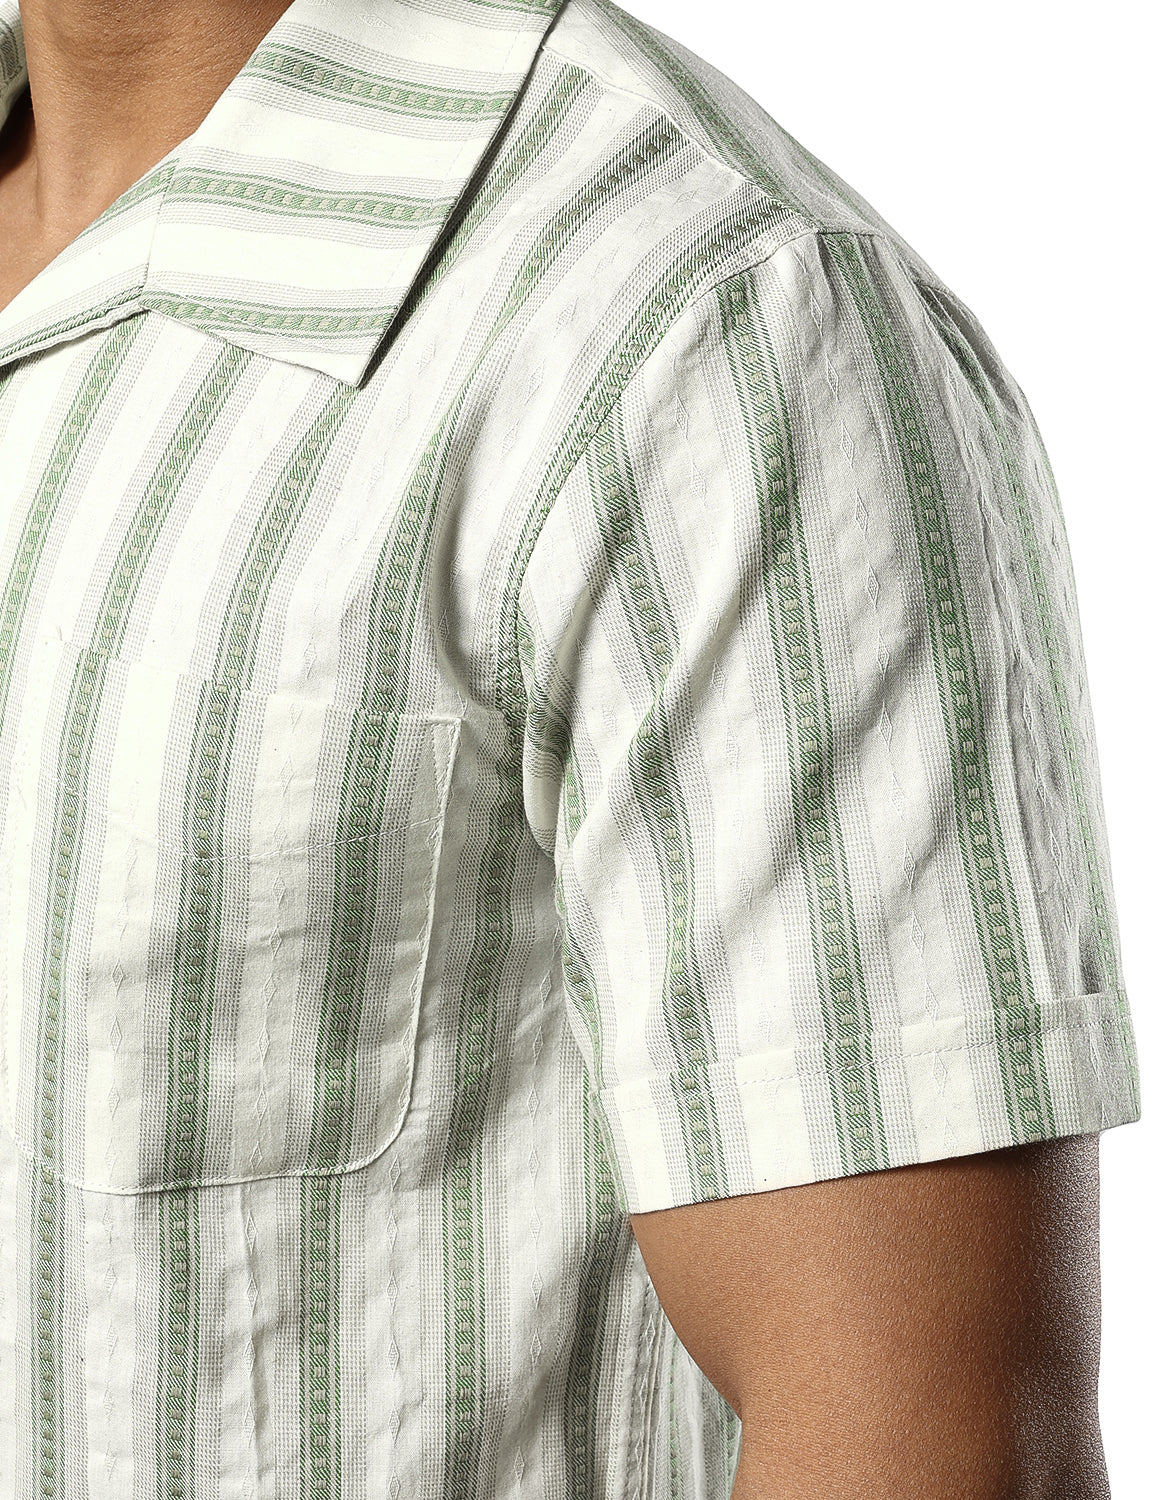 JOGAL Mens Cuban Guayabera Shirts Striped Short Sleeve Casual Button Down Shirt Hawaiian Beach Shirts